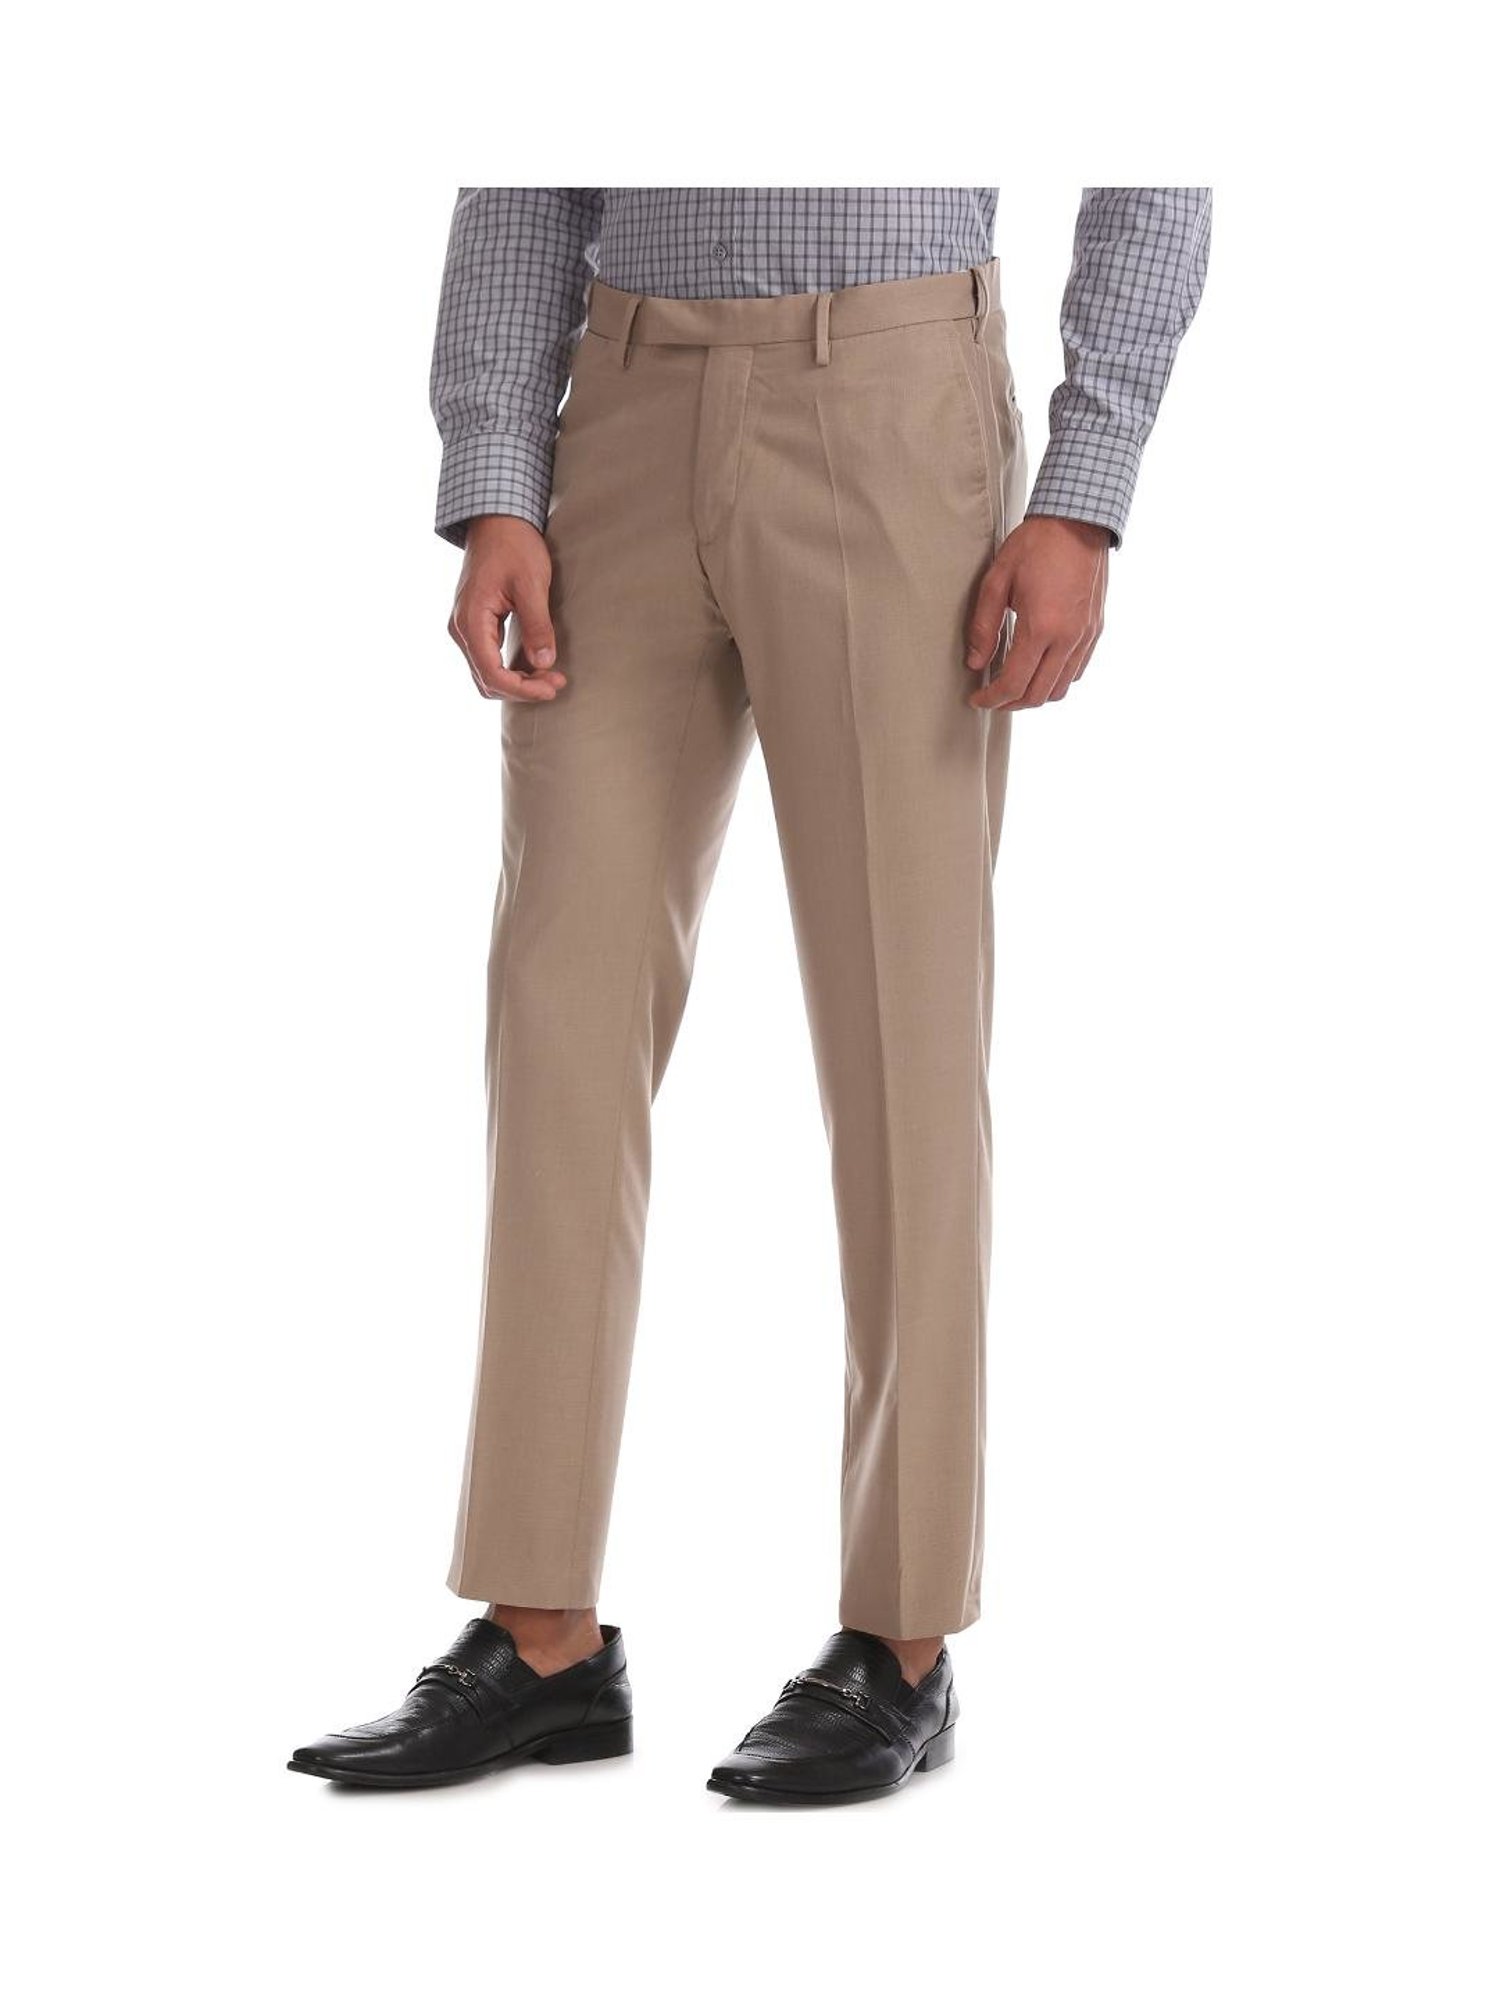 Buy Peter England Men Brown Casual Trousers online